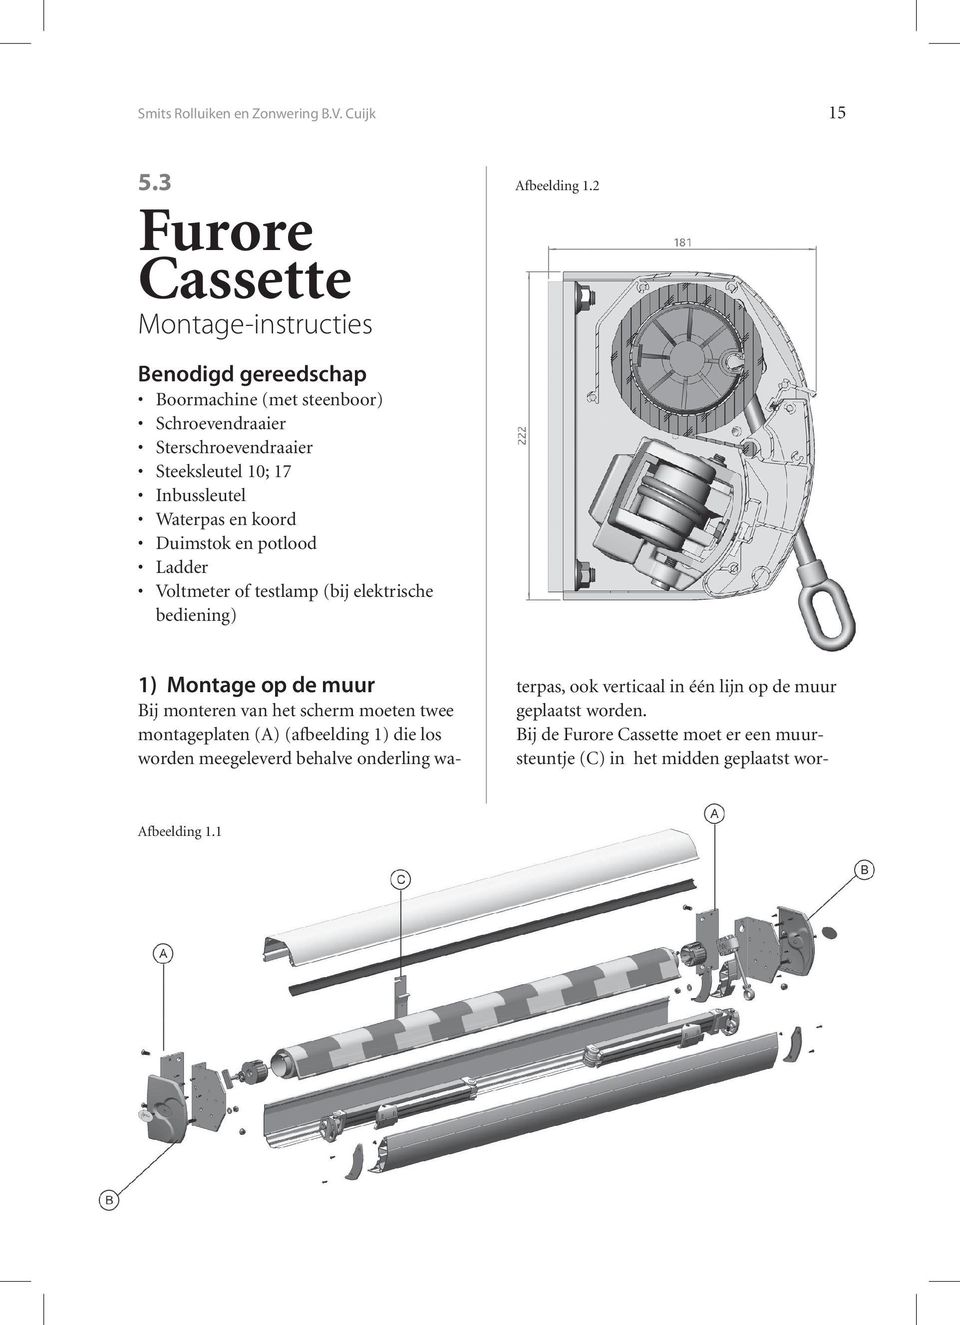 Inbussleutel Waterpas en koord Duimstok en potlood Ladder Voltmeter of testlamp (bij elektrische bediening) Afbeelding 1.